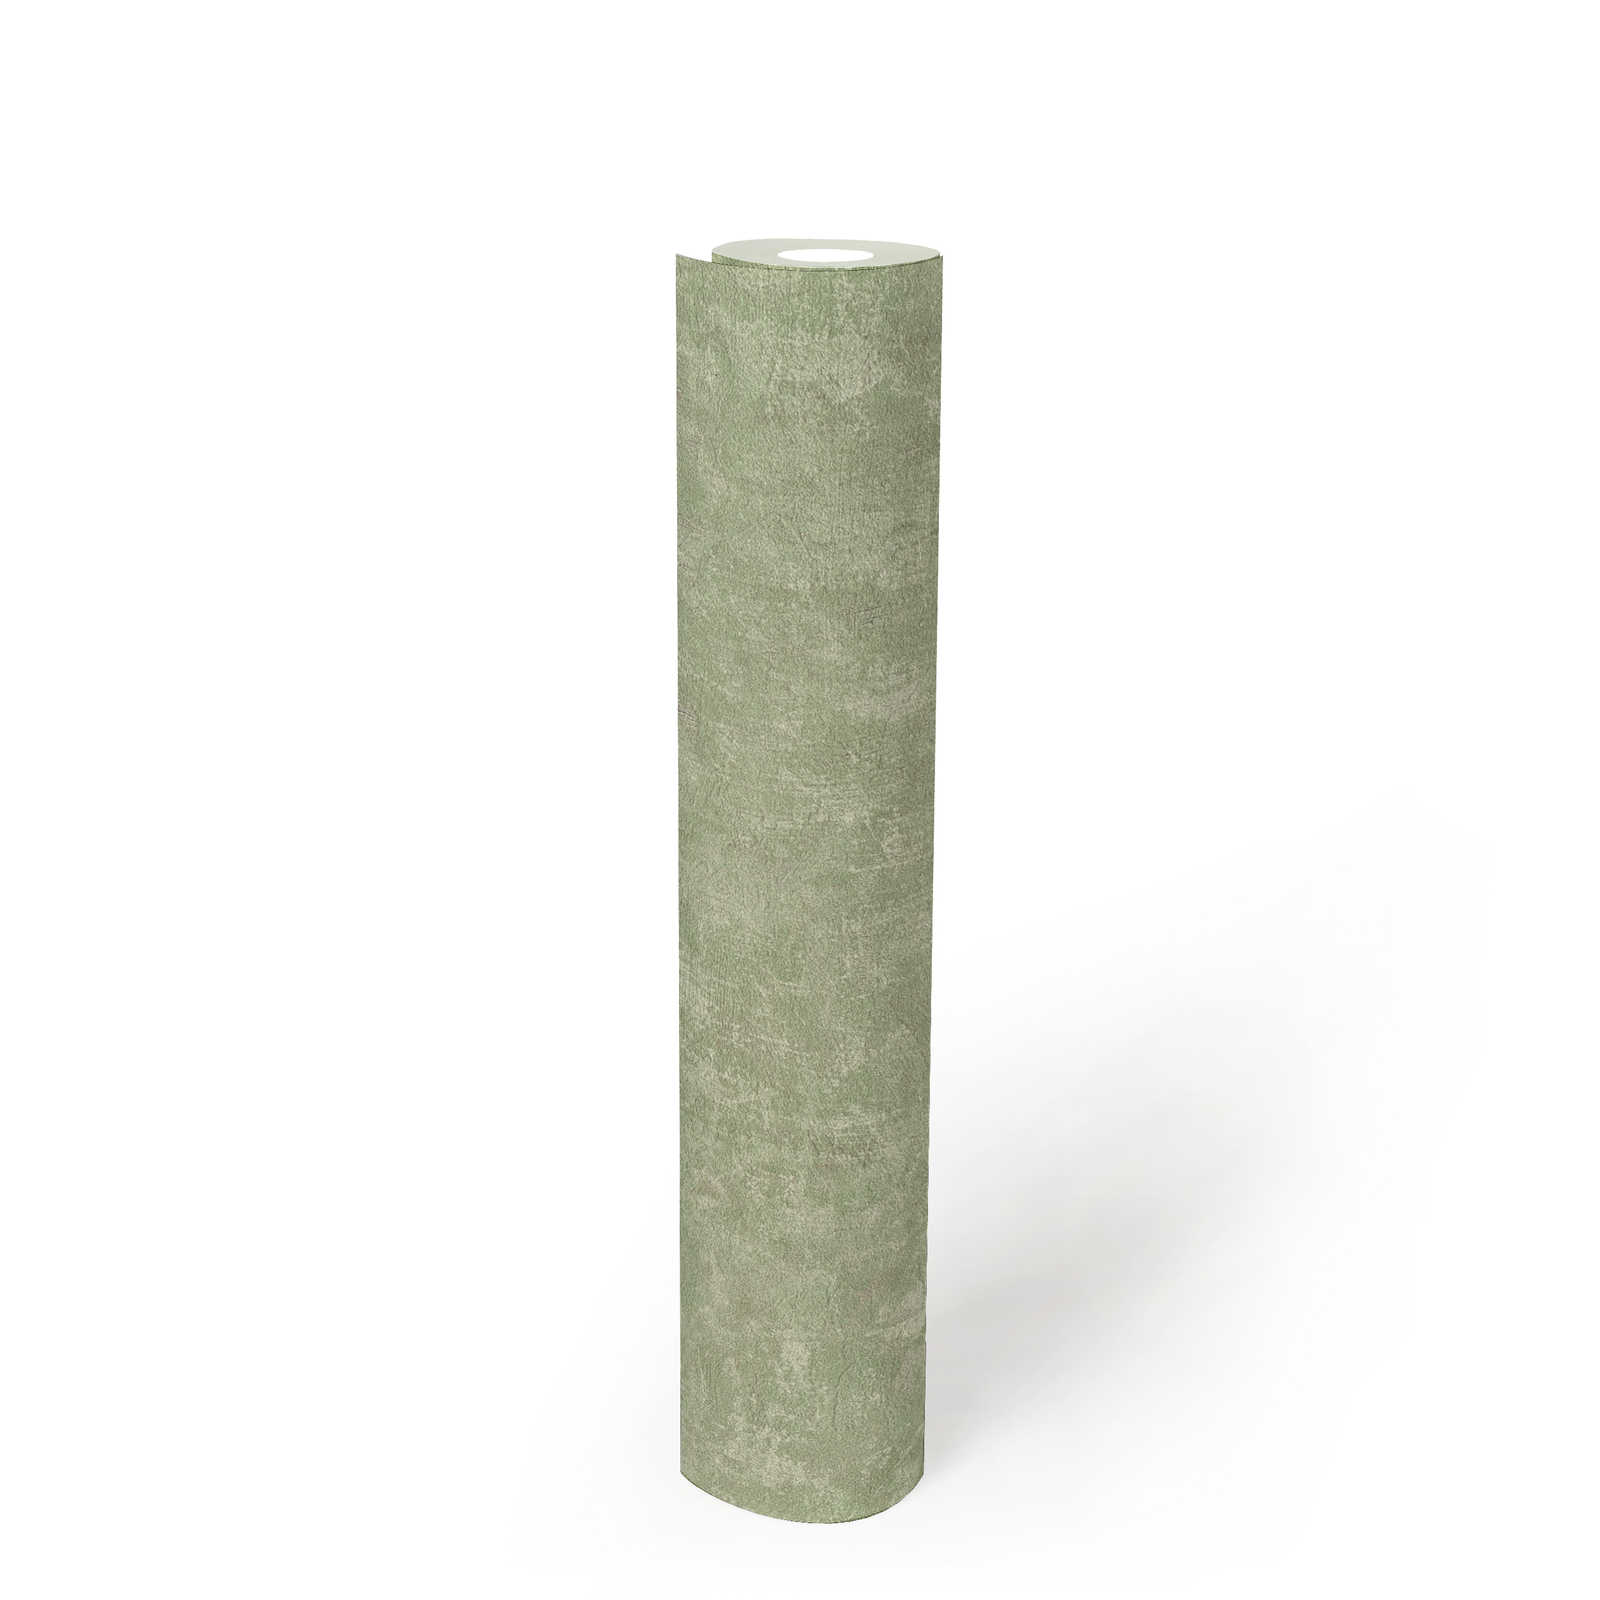             Vliestapete mit Strukturmuster PVC-frei – Grün
        